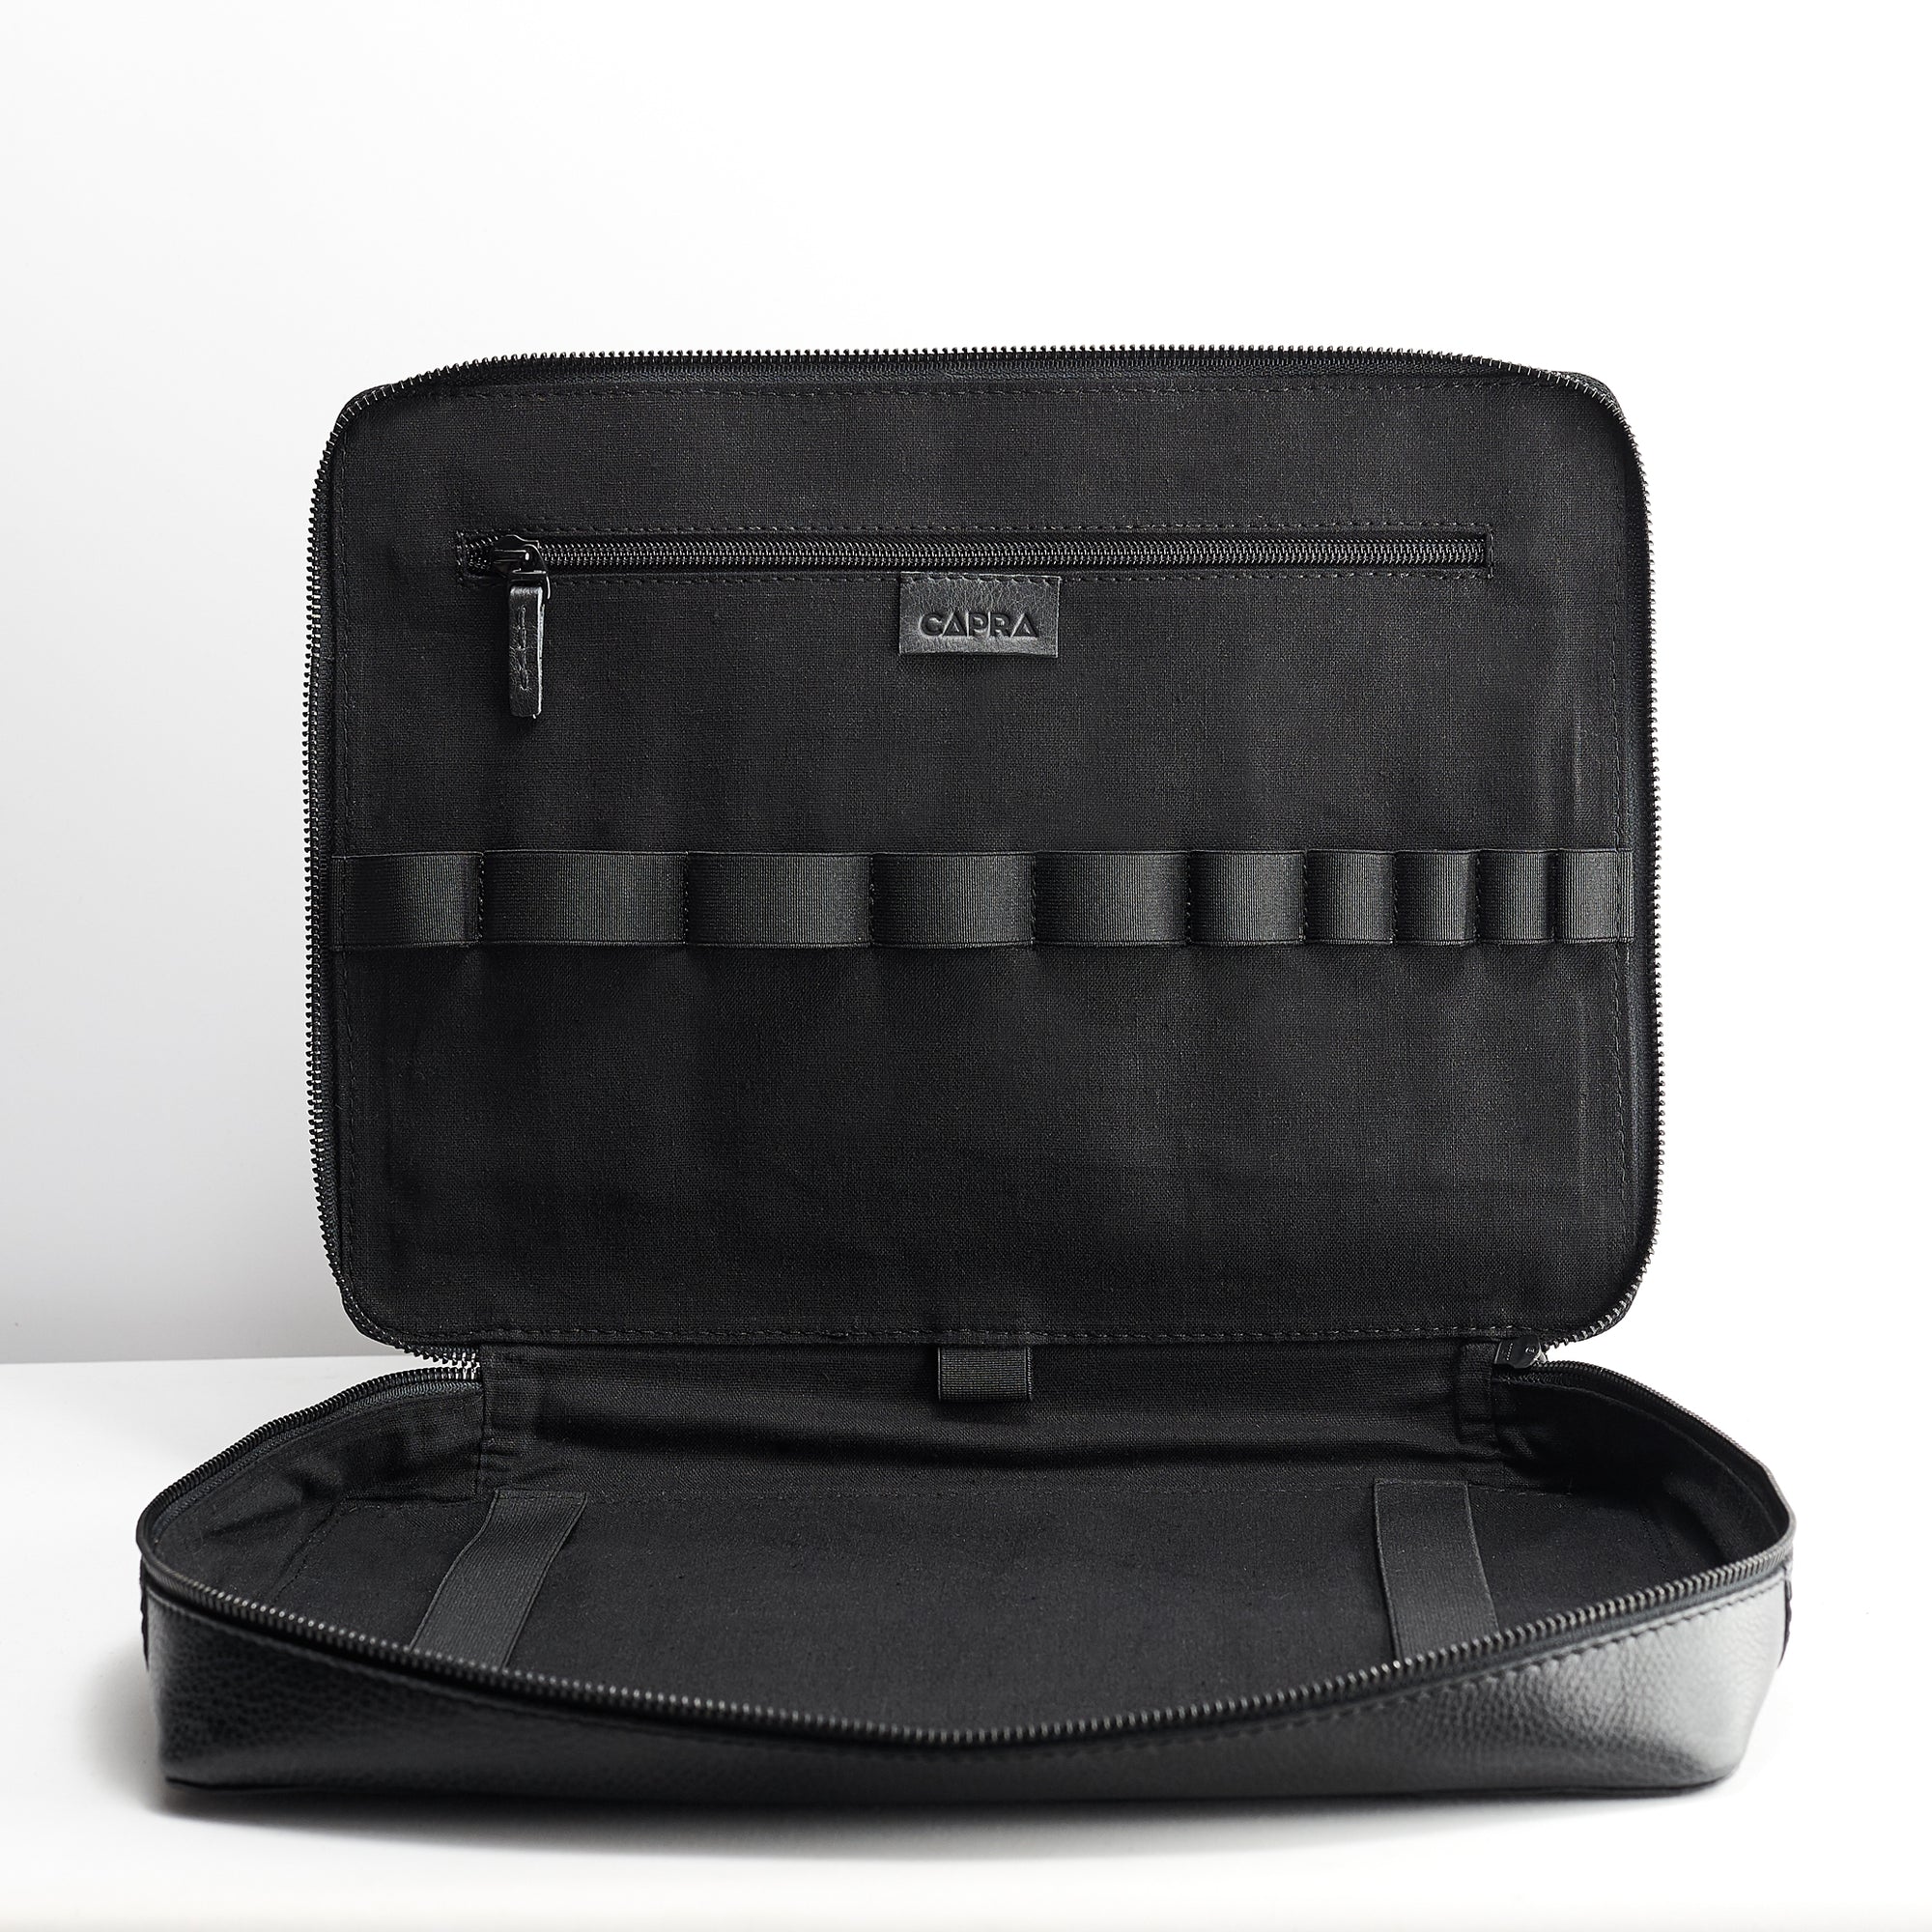 Linen interior. Black gear bag tech organizer by Capra Leather